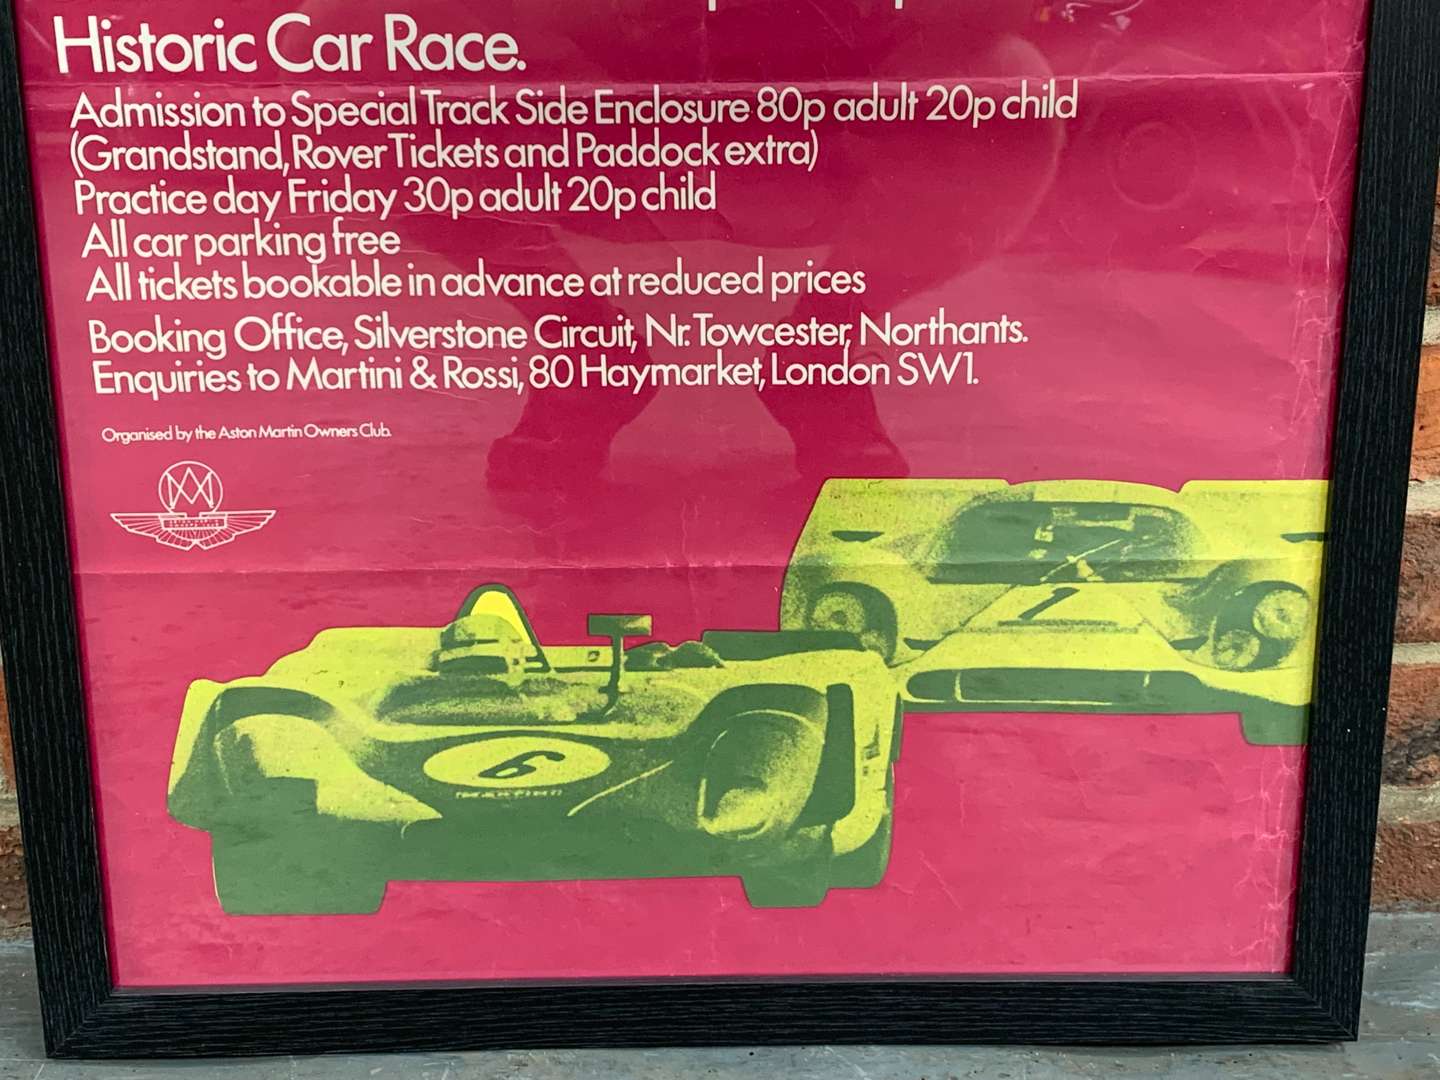 <p>Framed Original 1971 Silverstone Poster 56 x 82cm</p>